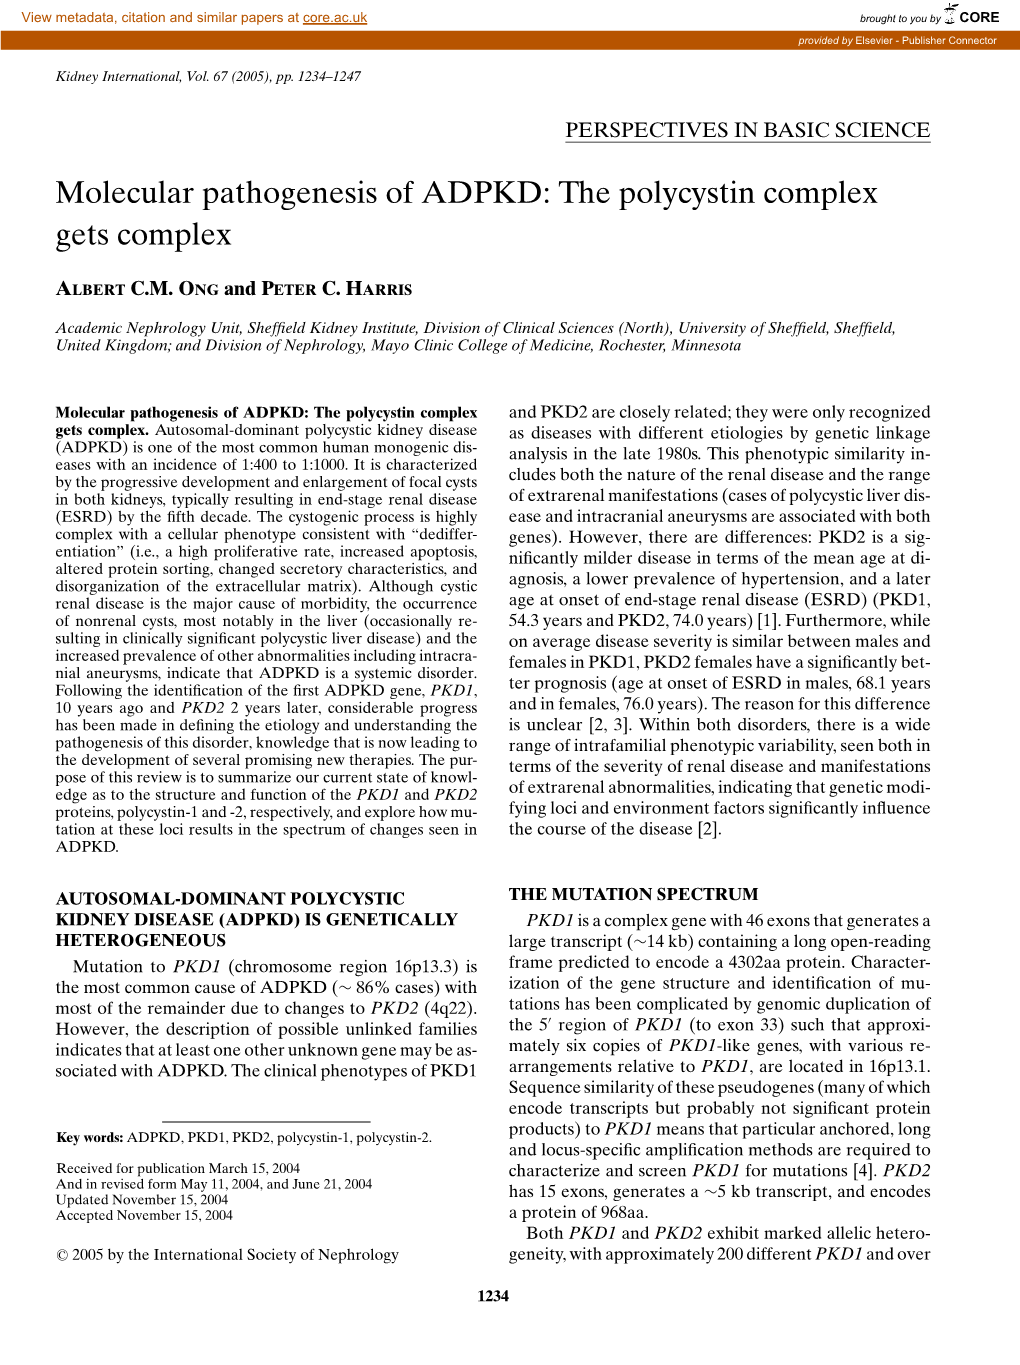 Molecular Pathogenesis of ADPKD: the Polycystin Complex Gets Complex